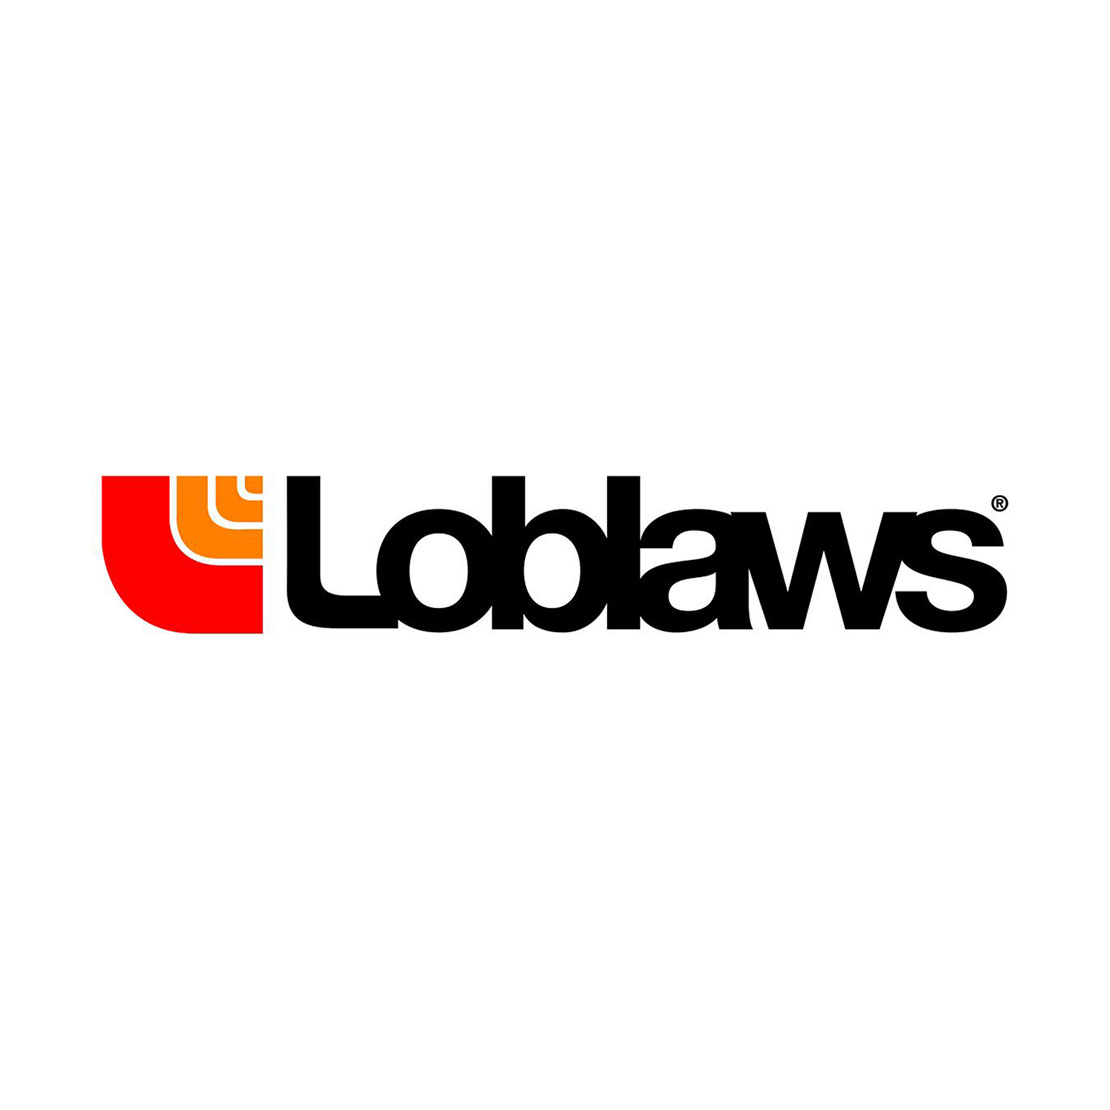 Loblaws_logo-promo